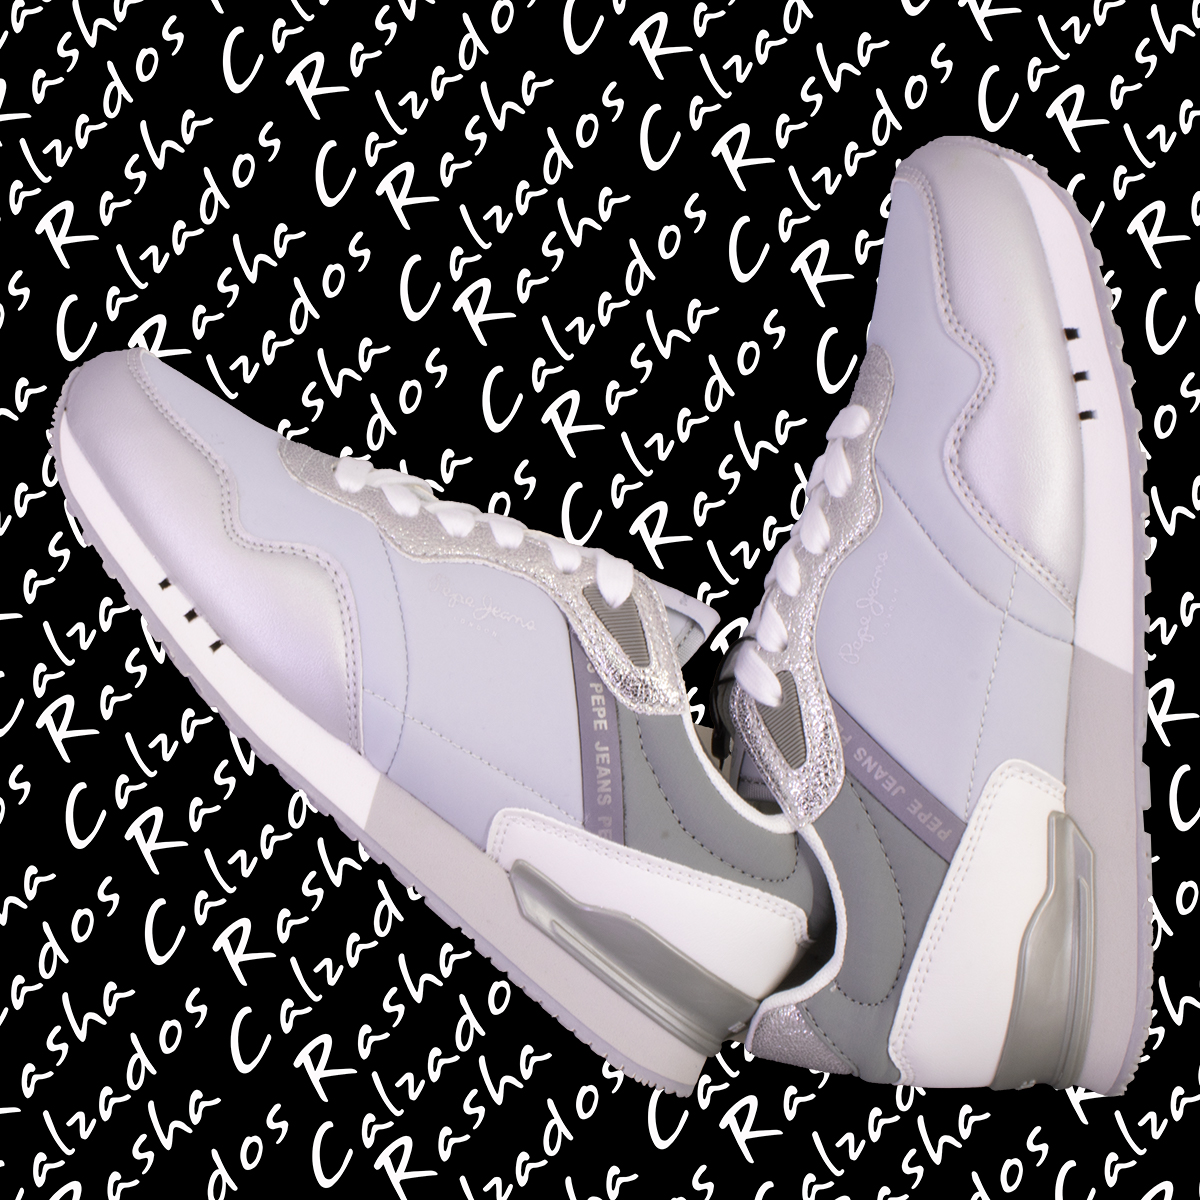 ❤️WE LOVE SNEAKERS❤️

🖥#TiendaOnline :
CalzadosRasha.com

#CalzadosRasha #RashaShoes #Rasha #SneakersShoes #Pepe #Jeans #ShoppingOnline #RashaZapaterias #ShoesAndBags #PepeJeans #Denim #Sneakers #NuevaColeccion